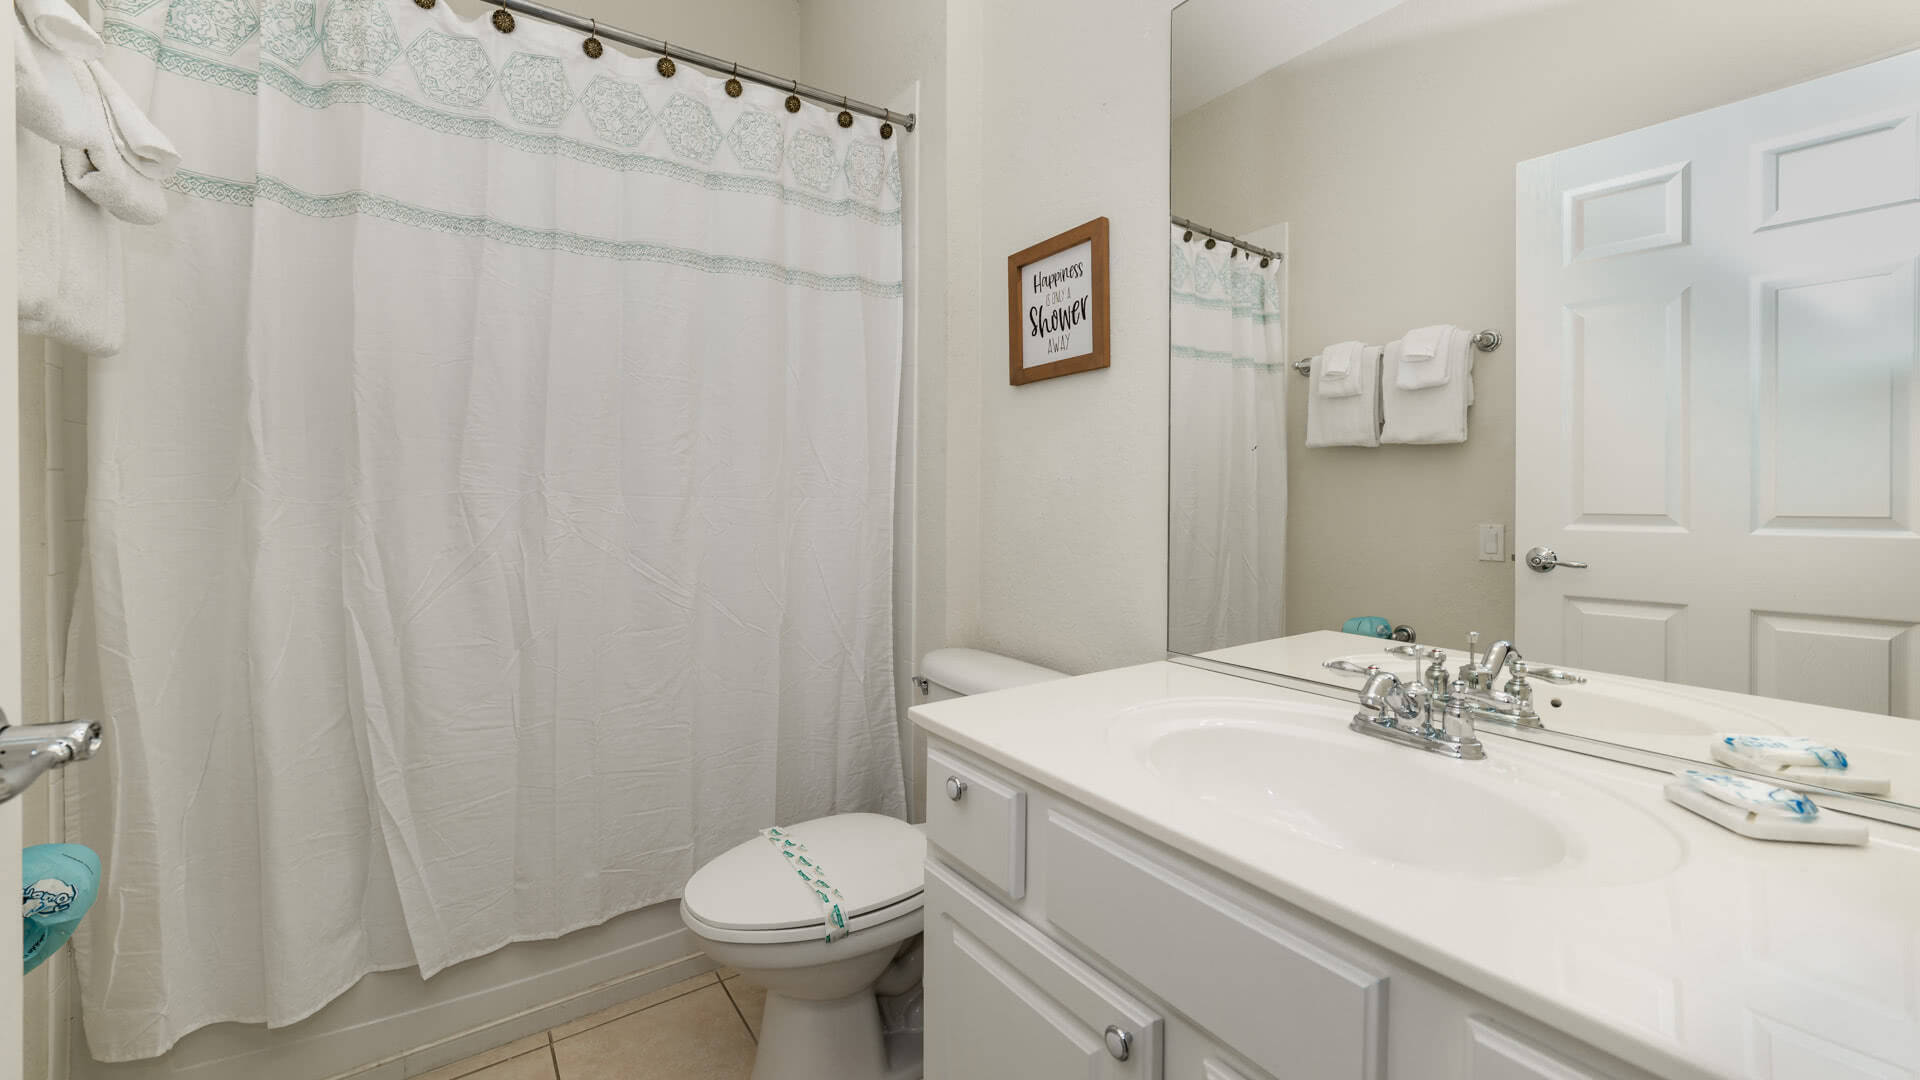 King Suite Bathroom 4 
Tub/Shower Combo